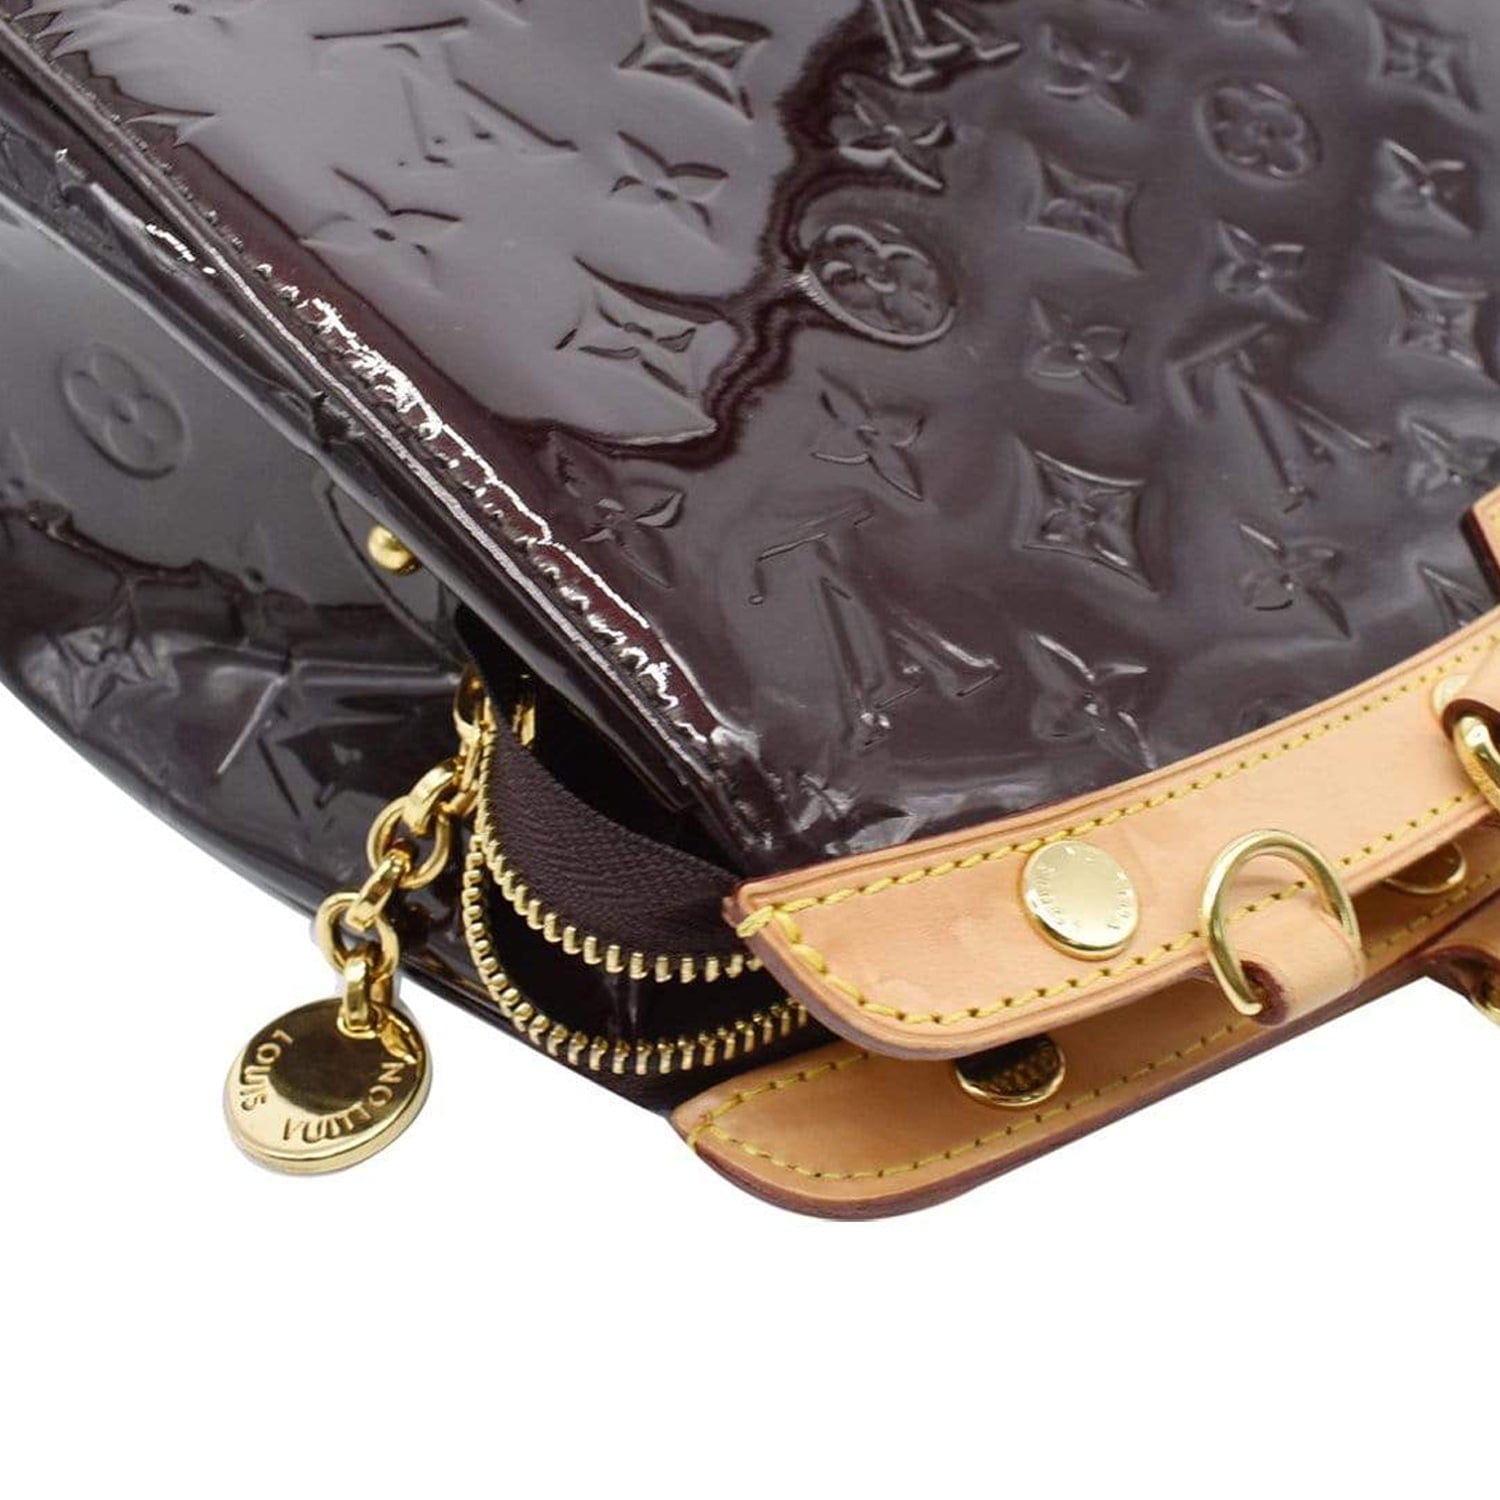 Louis Vuitton Amarante Monogram Vernis Chain Bag